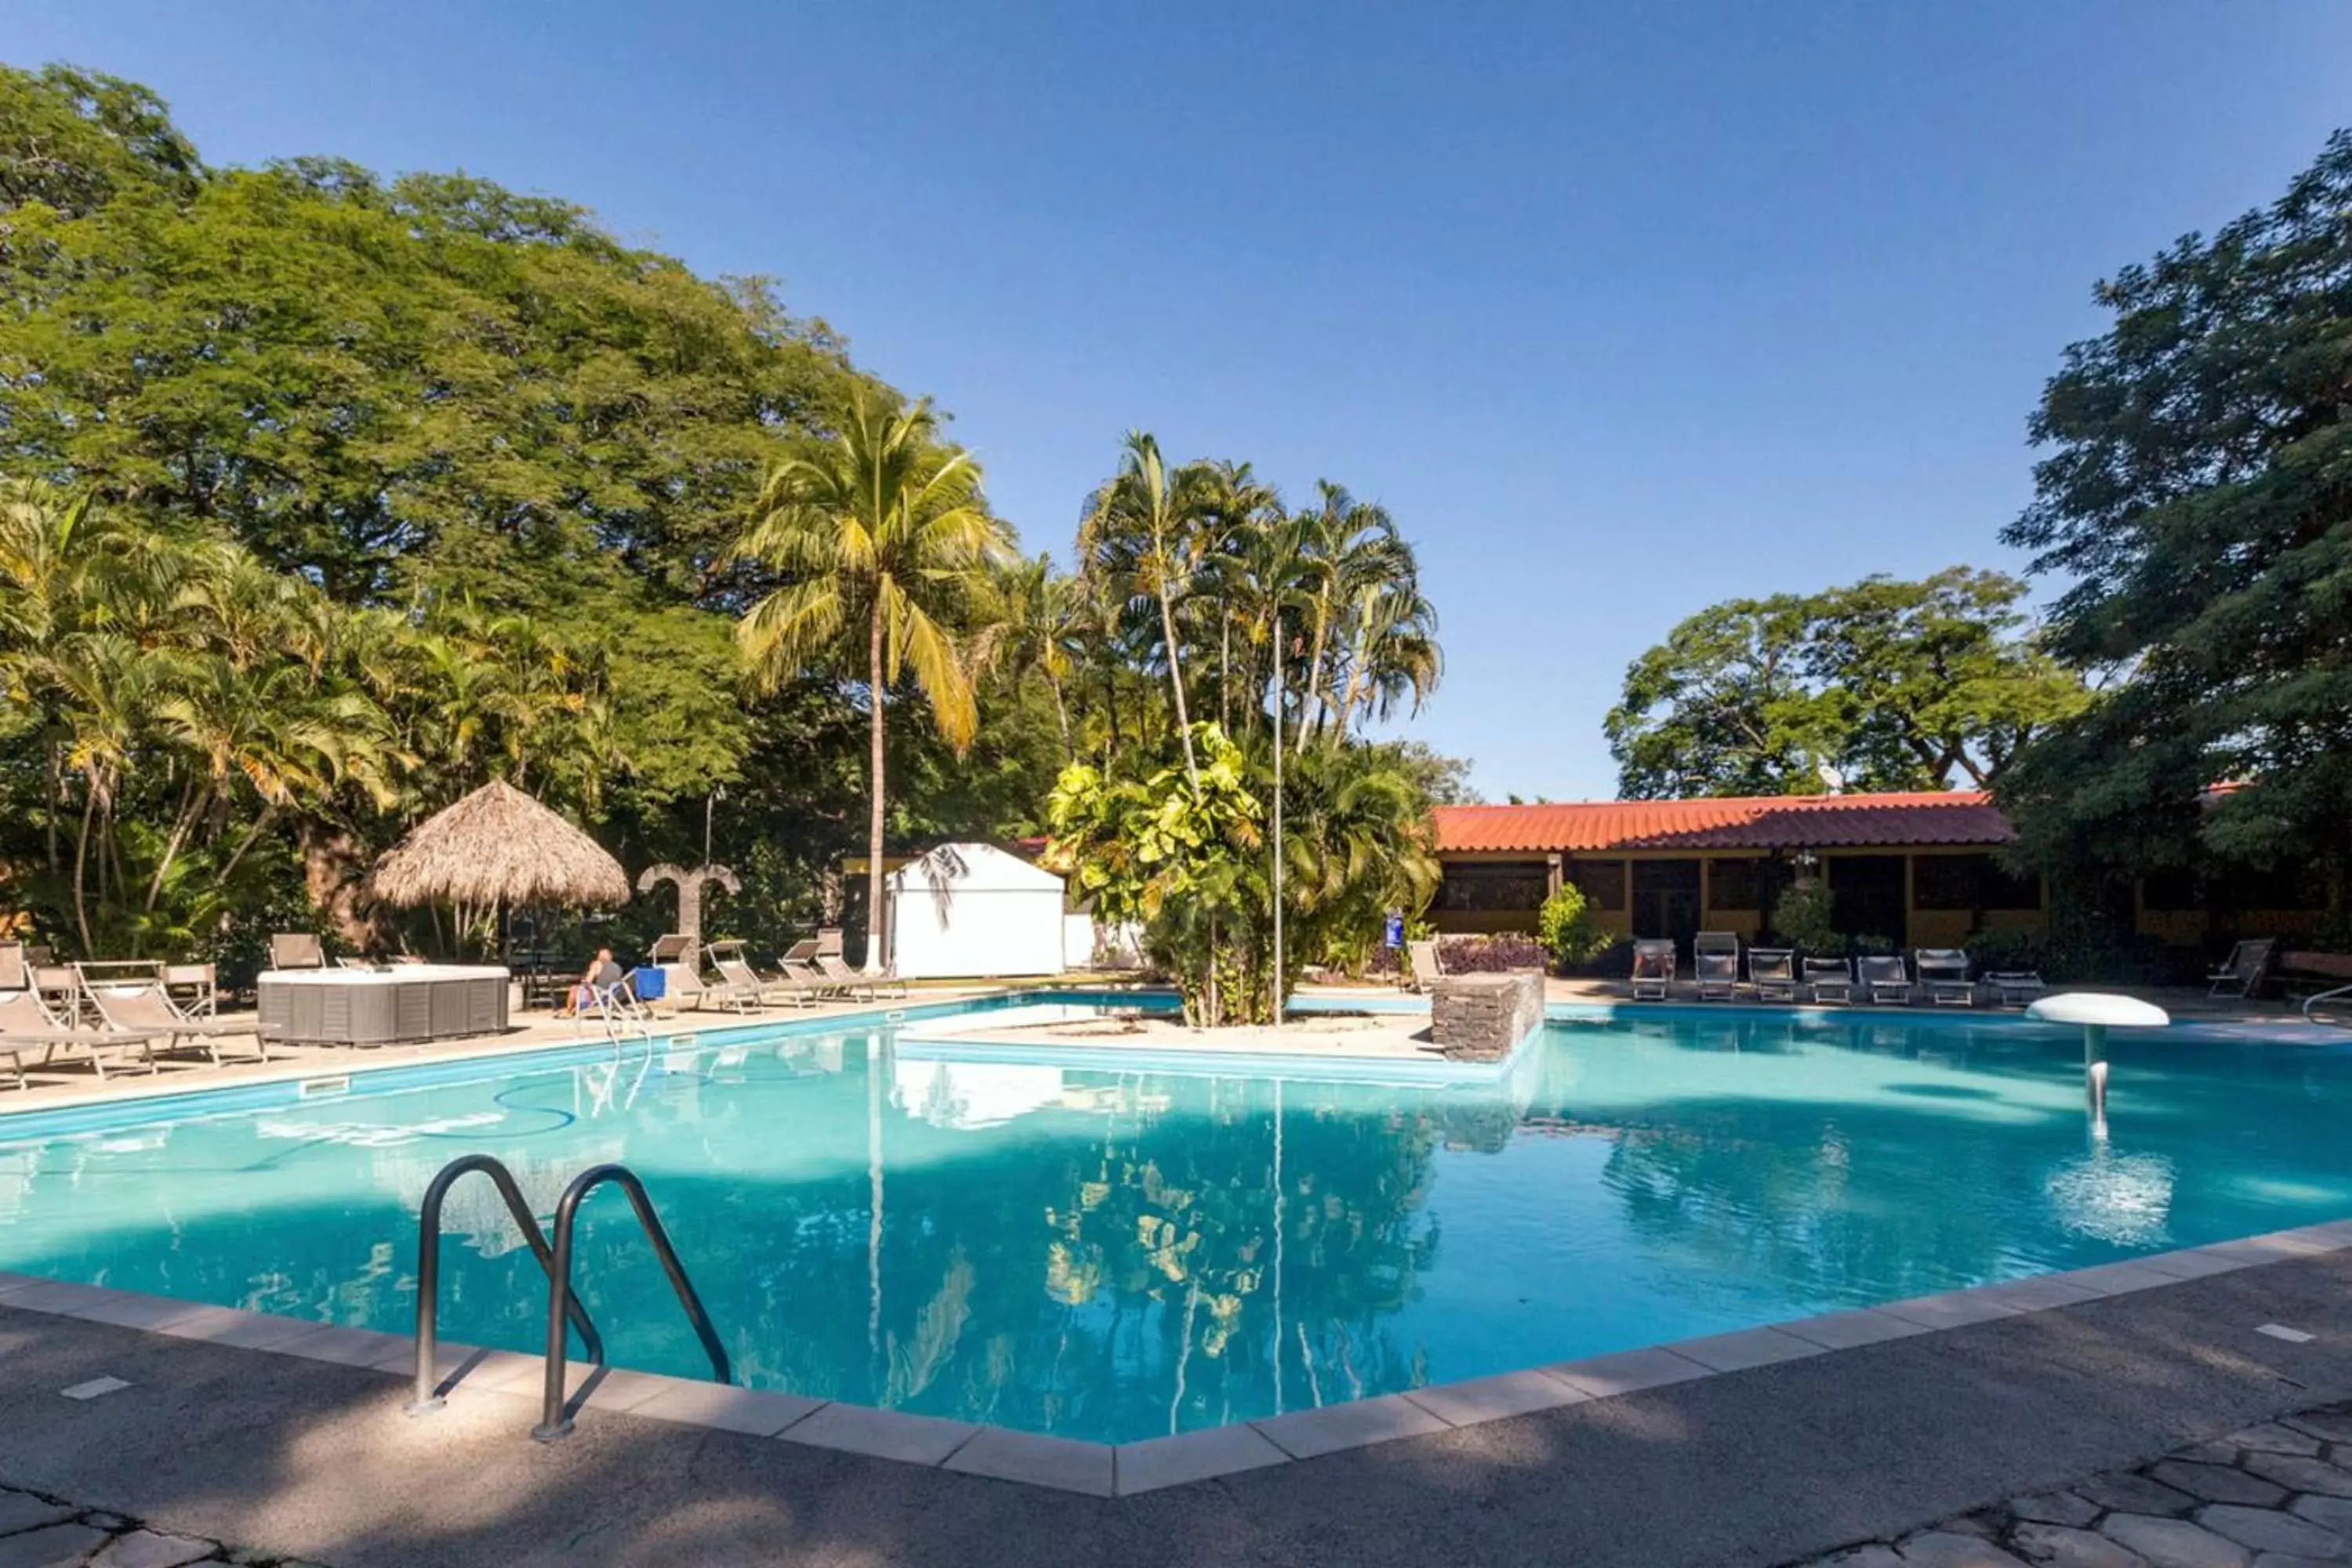 On site, Swimming Pool in Best Western El Sitio Hotel & Casino